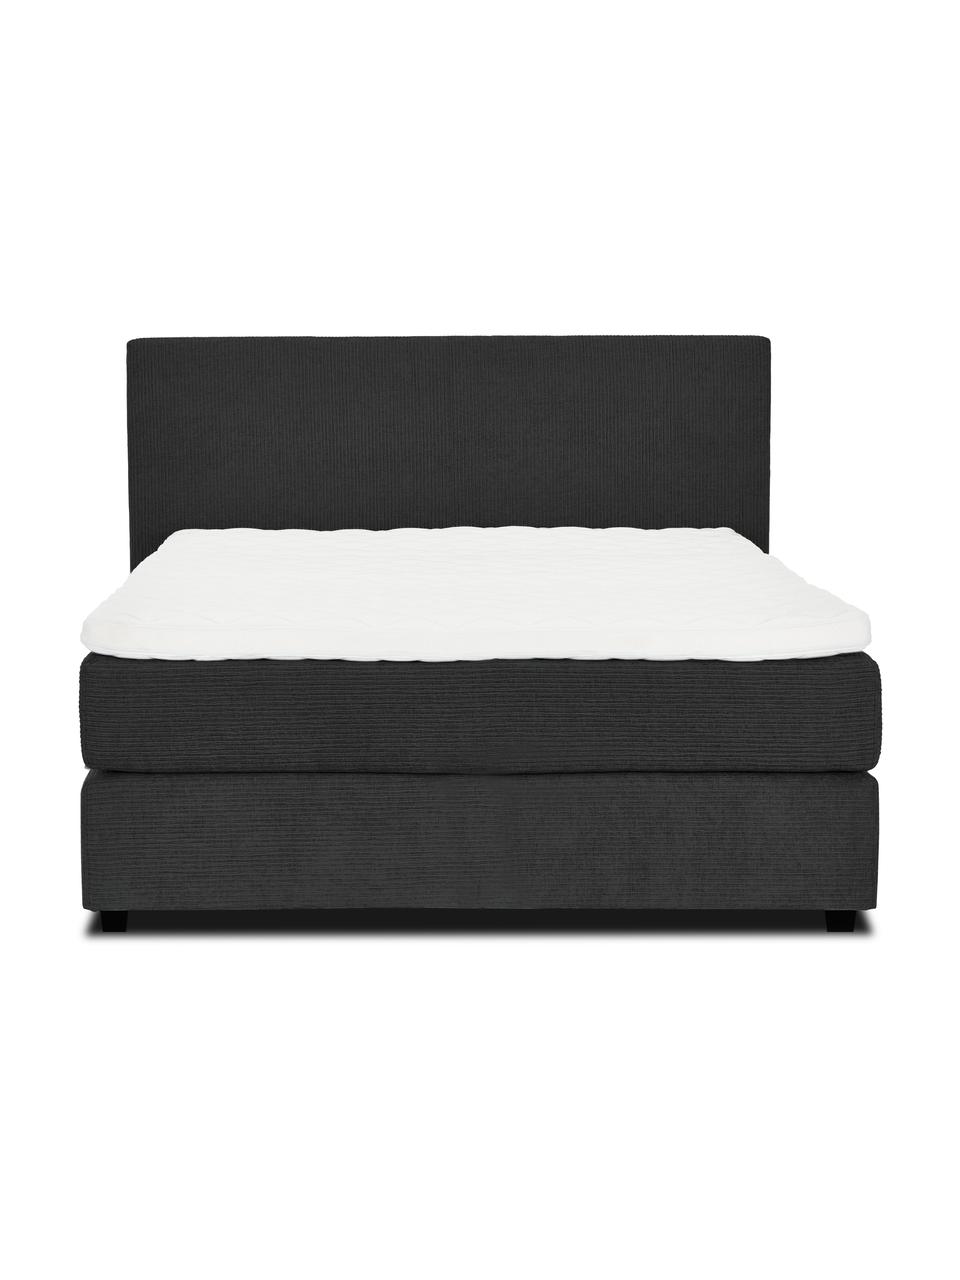 Manšestrová boxspring postel premium Eliza, Tmavě šedá, Š 200 cm, D 200 cm, stupeň tvrdosti 3